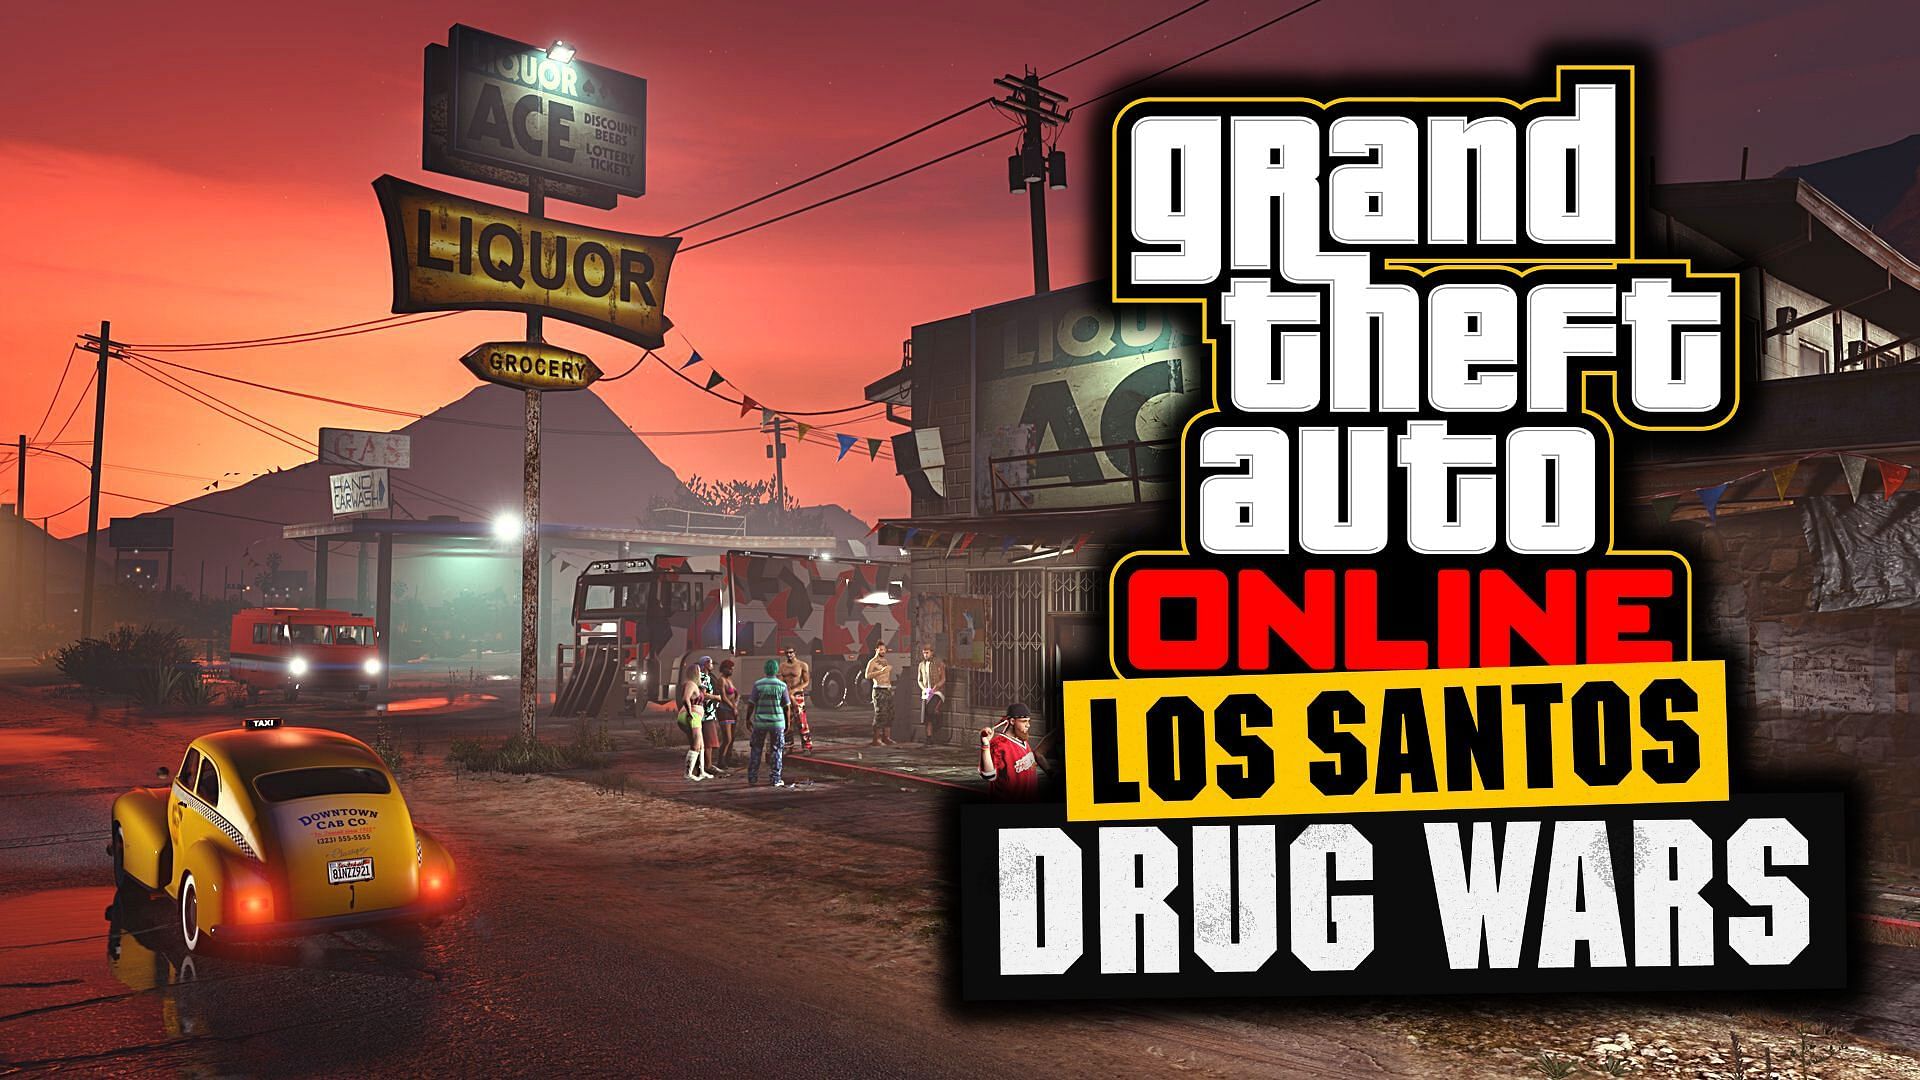 Fans showed concerns and disappointment after seeing no trailer of GTA Online Los Santos Drug Wars update so far (Image via Rockstar Games)